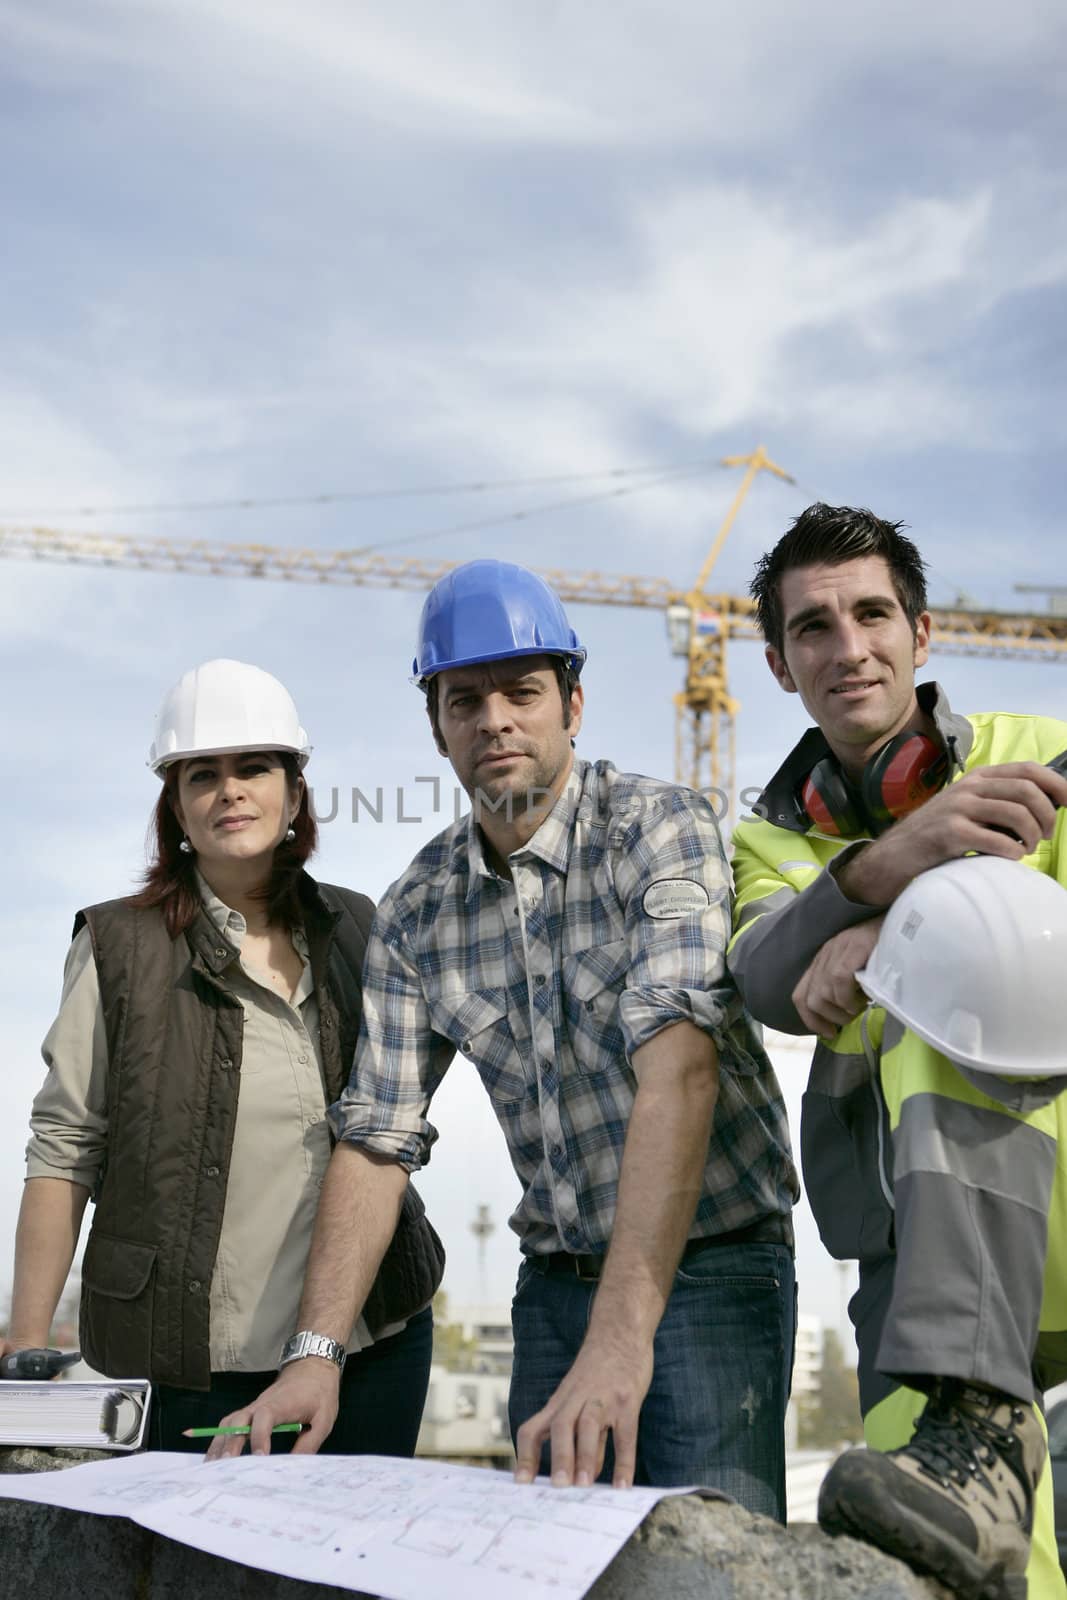 Construction colleagues by phovoir